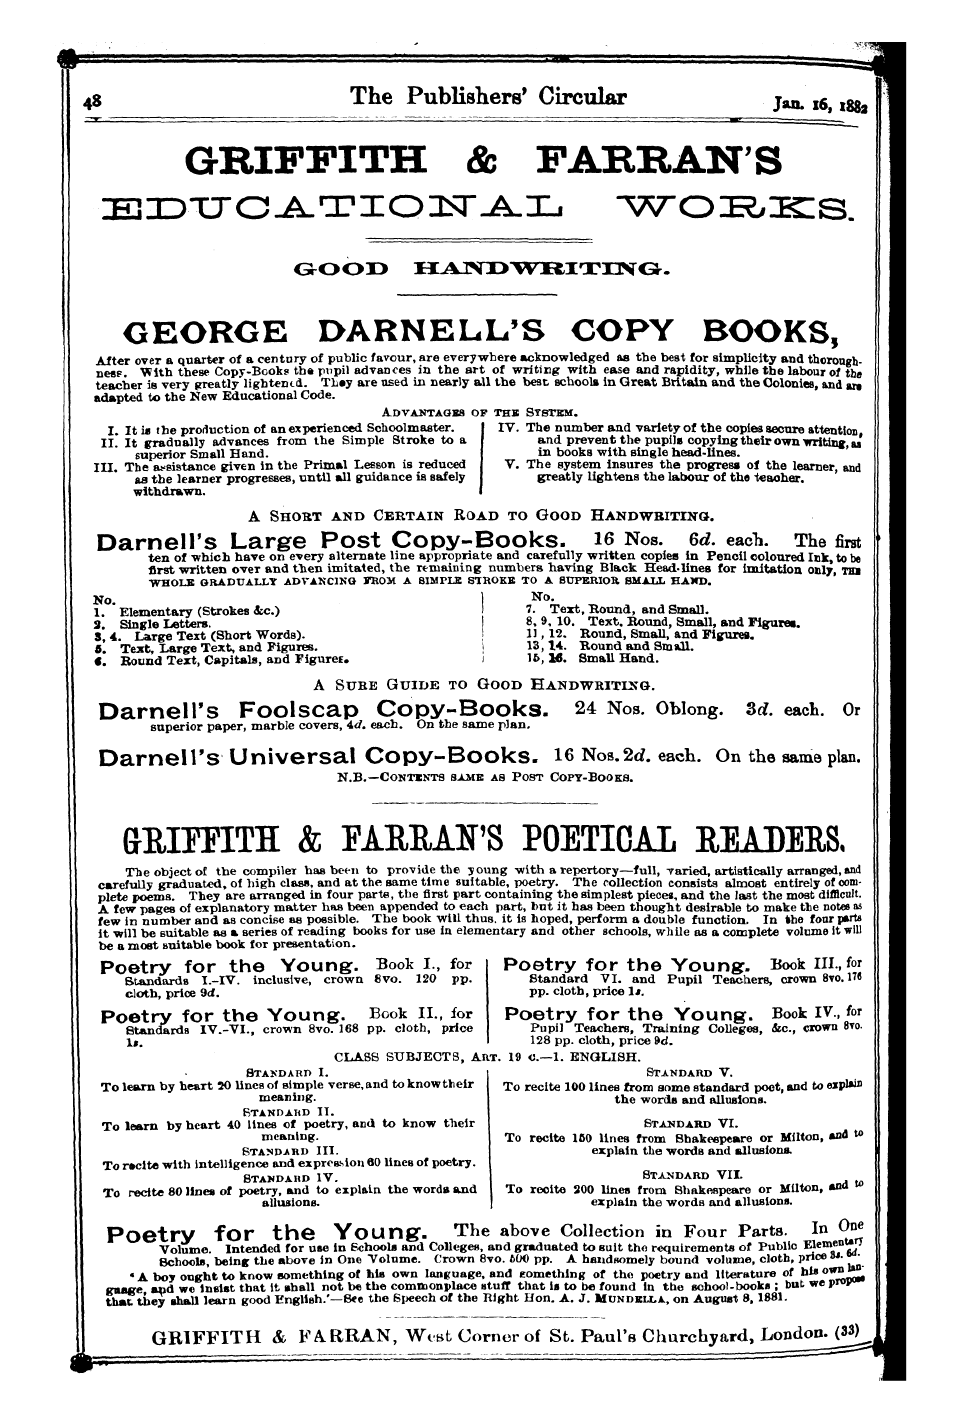 Publishers’ Circular (1880-1890): jS F Y, 1st edition - Ad04801